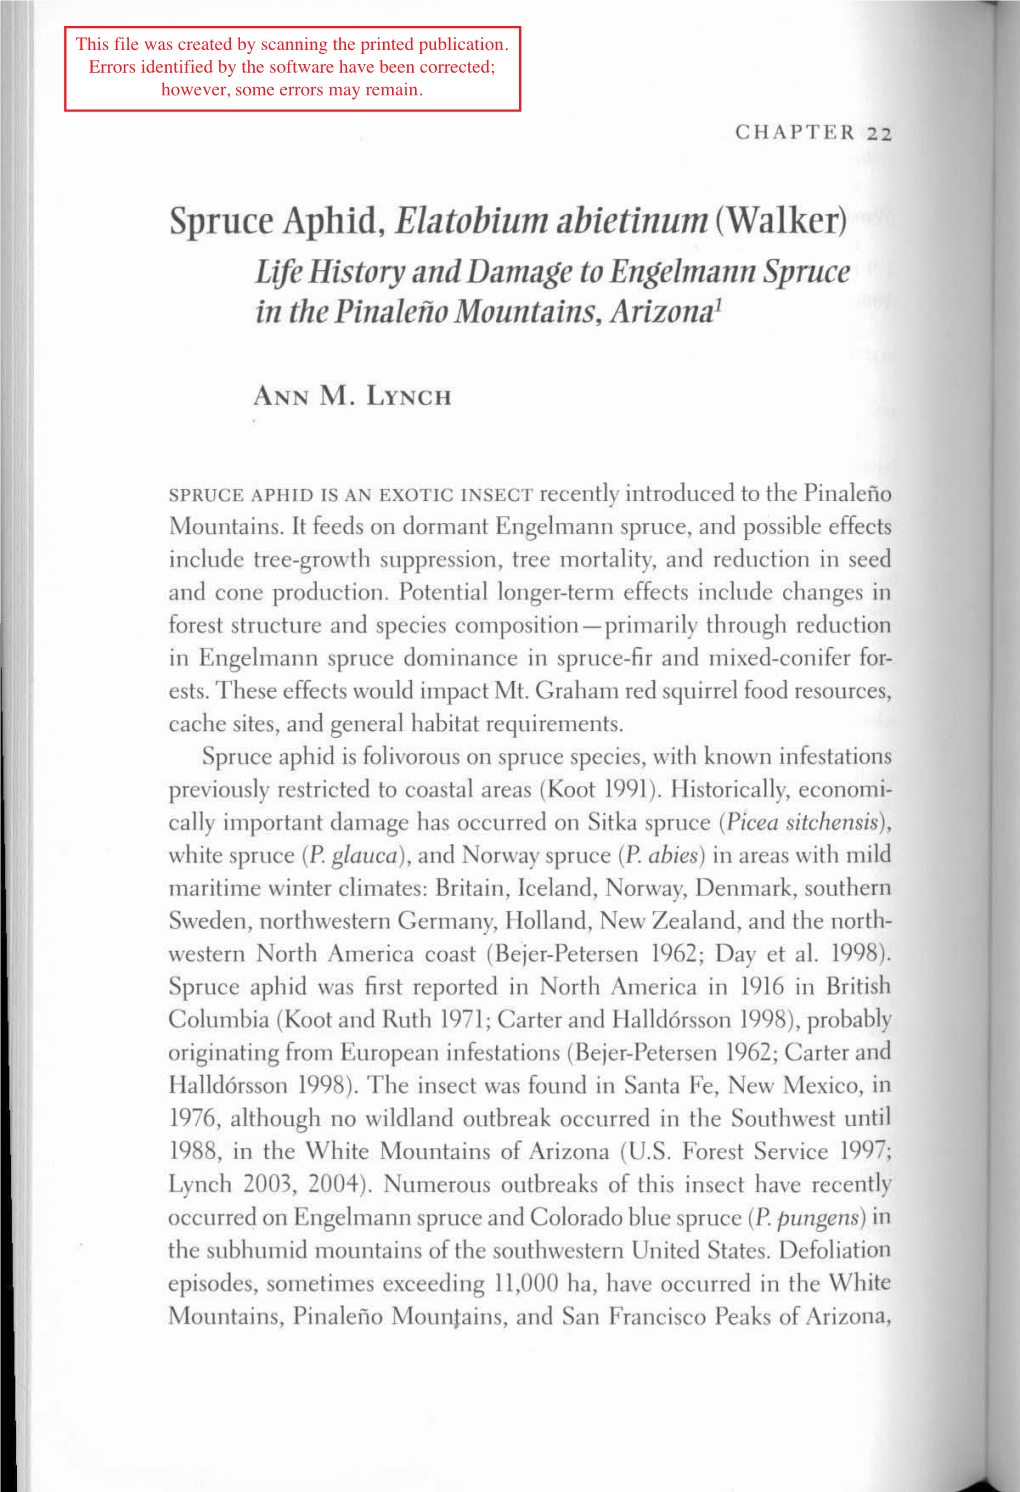 Spruce Aphid, Elatobium Abietinum (Walker) Life History and Damage to Engelinanu Spruce in the Pinaleño Mountains, Arizona'